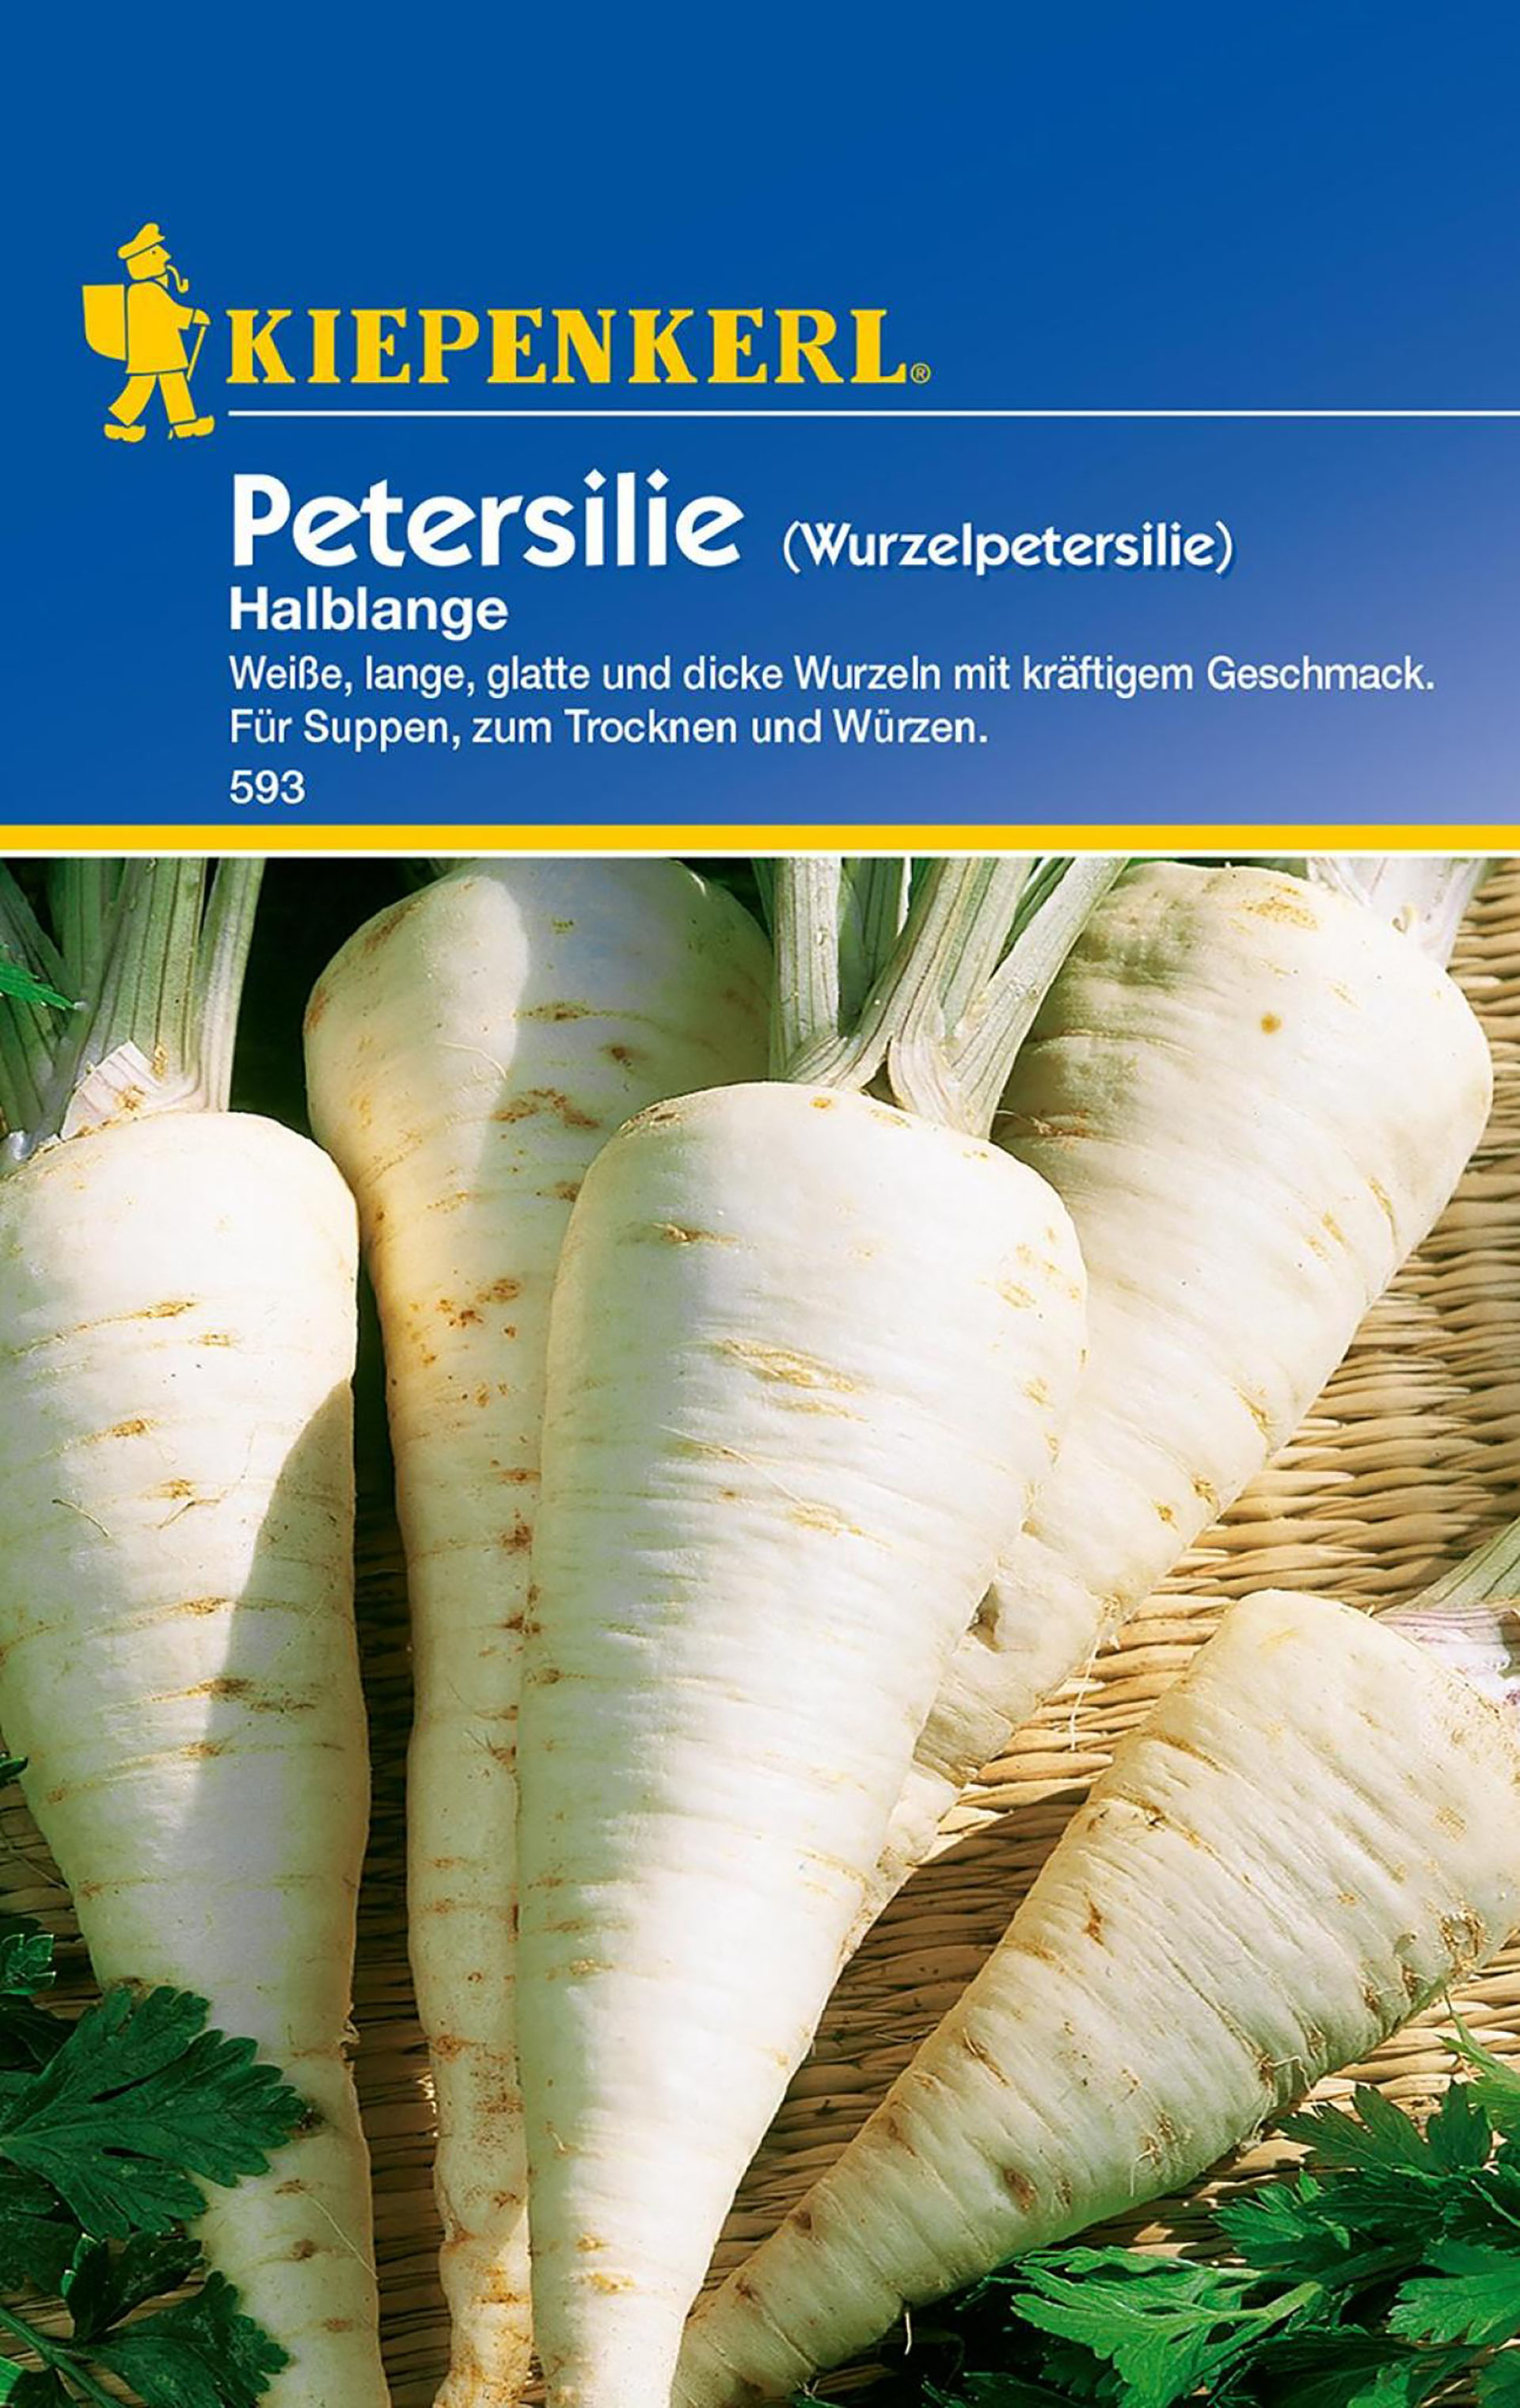 Petersilie (Wurzelpetersilie) PG-C